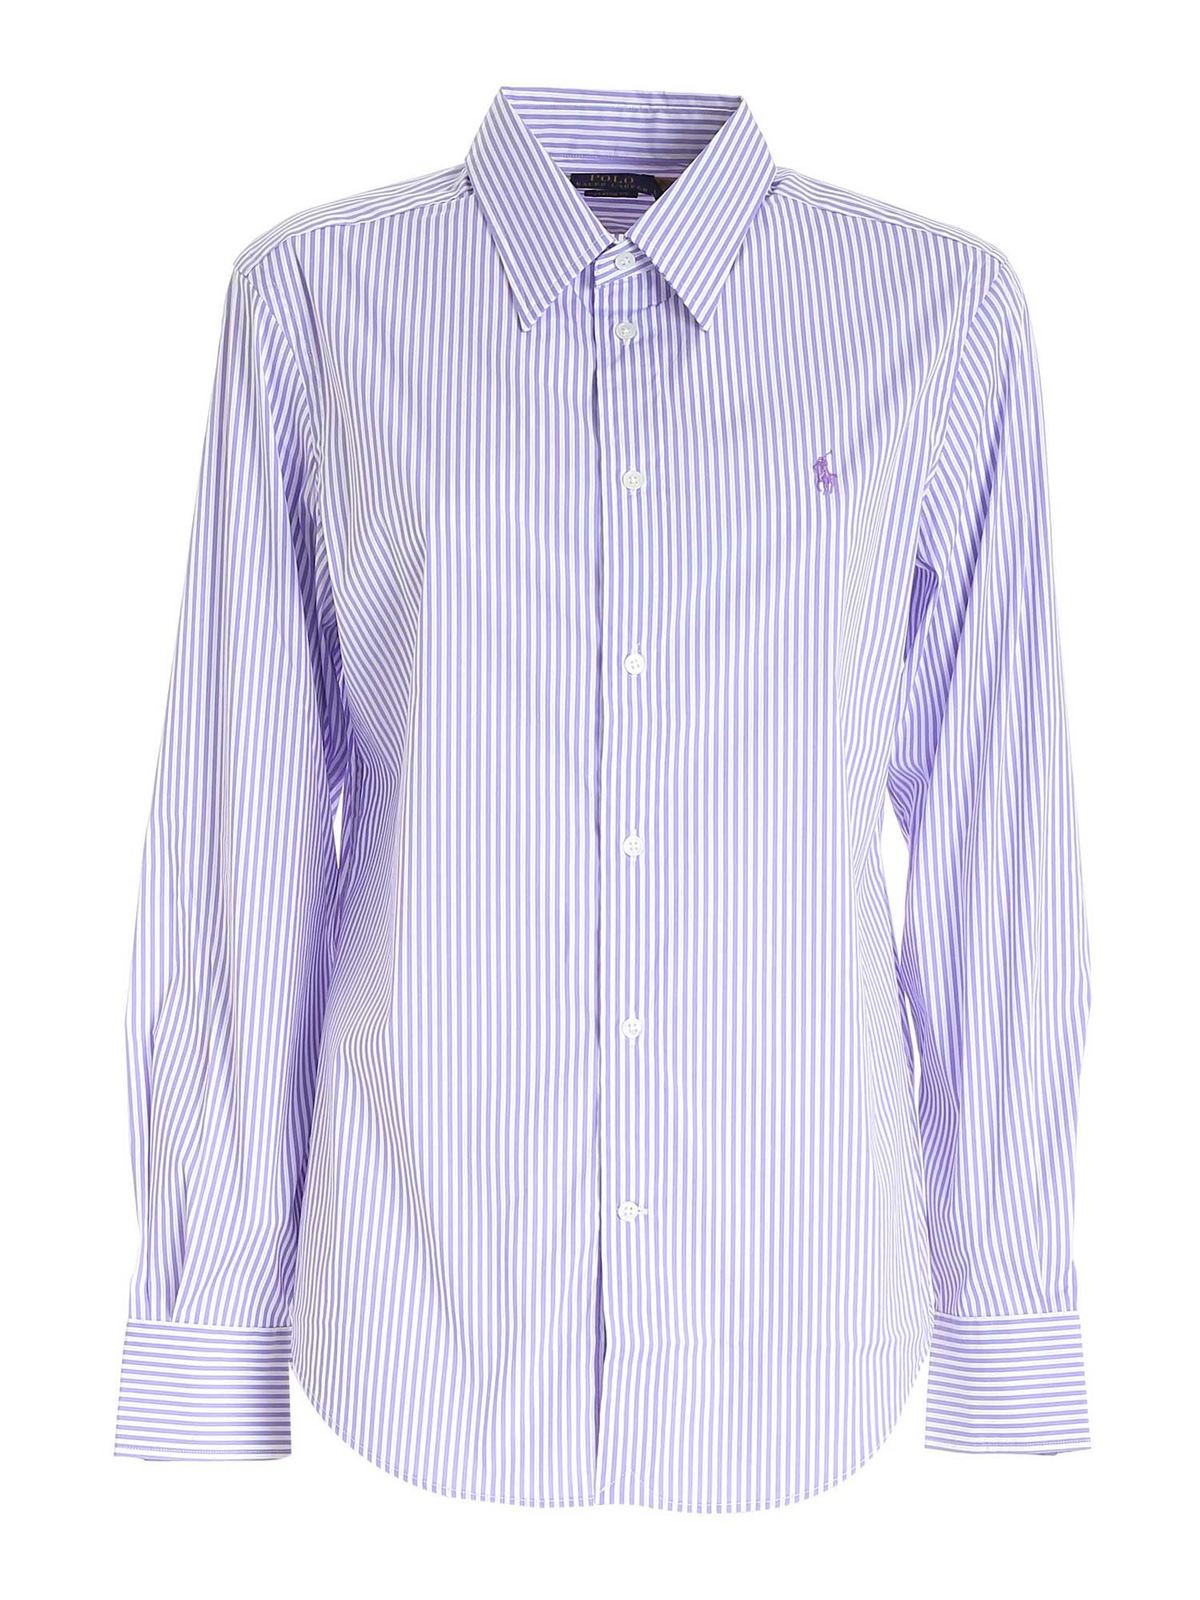 Descubrir 109+ imagen purple and white ralph lauren shirt